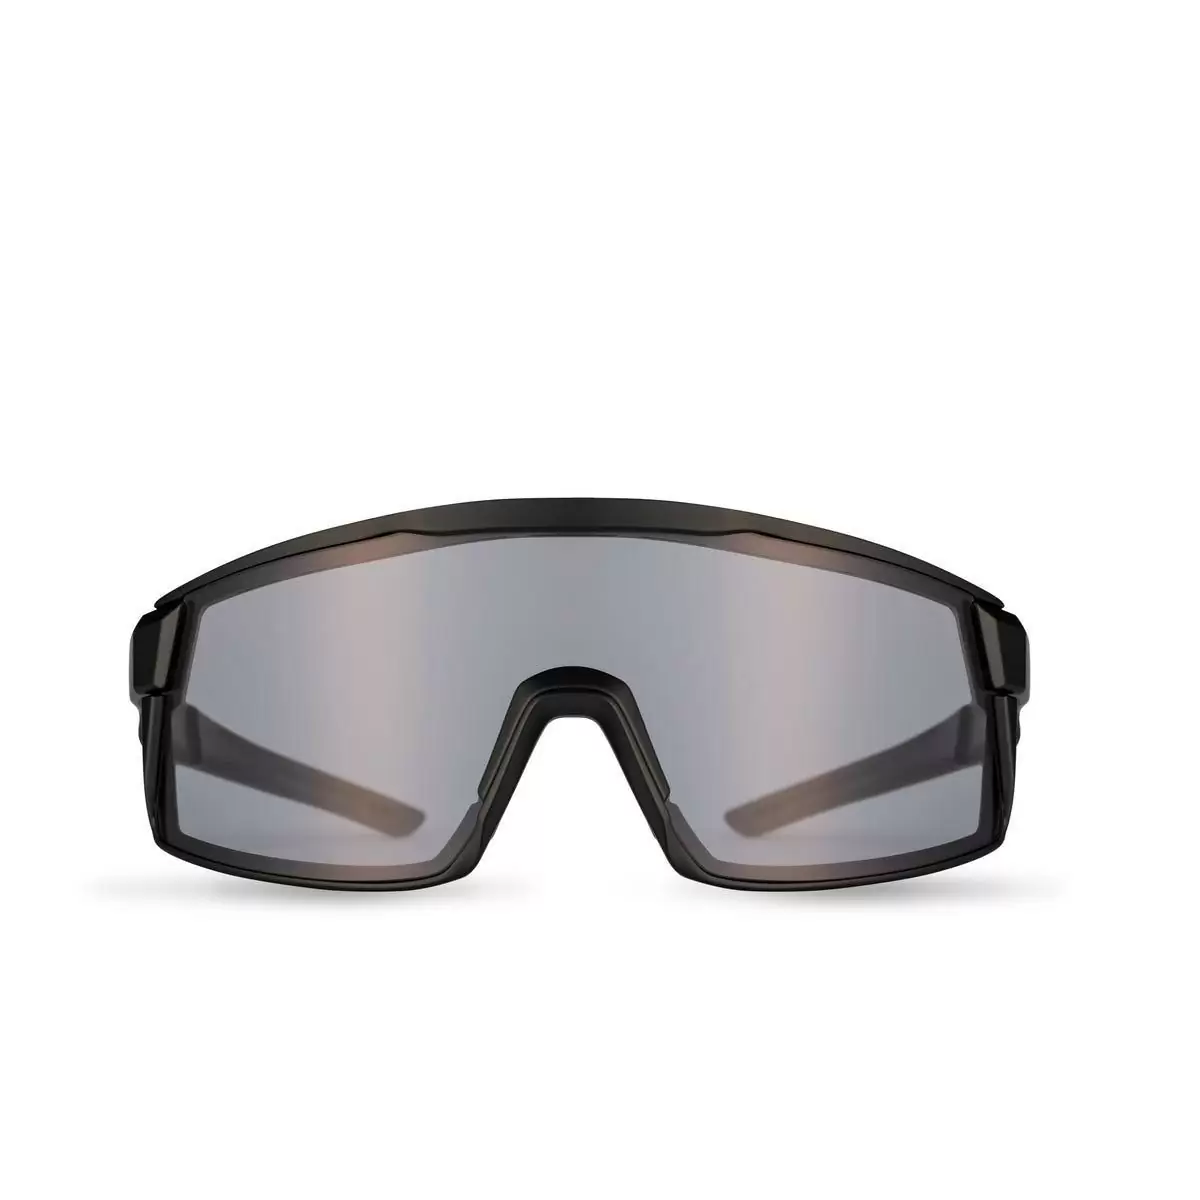 Sunglasses Verve HDII photochromic #2